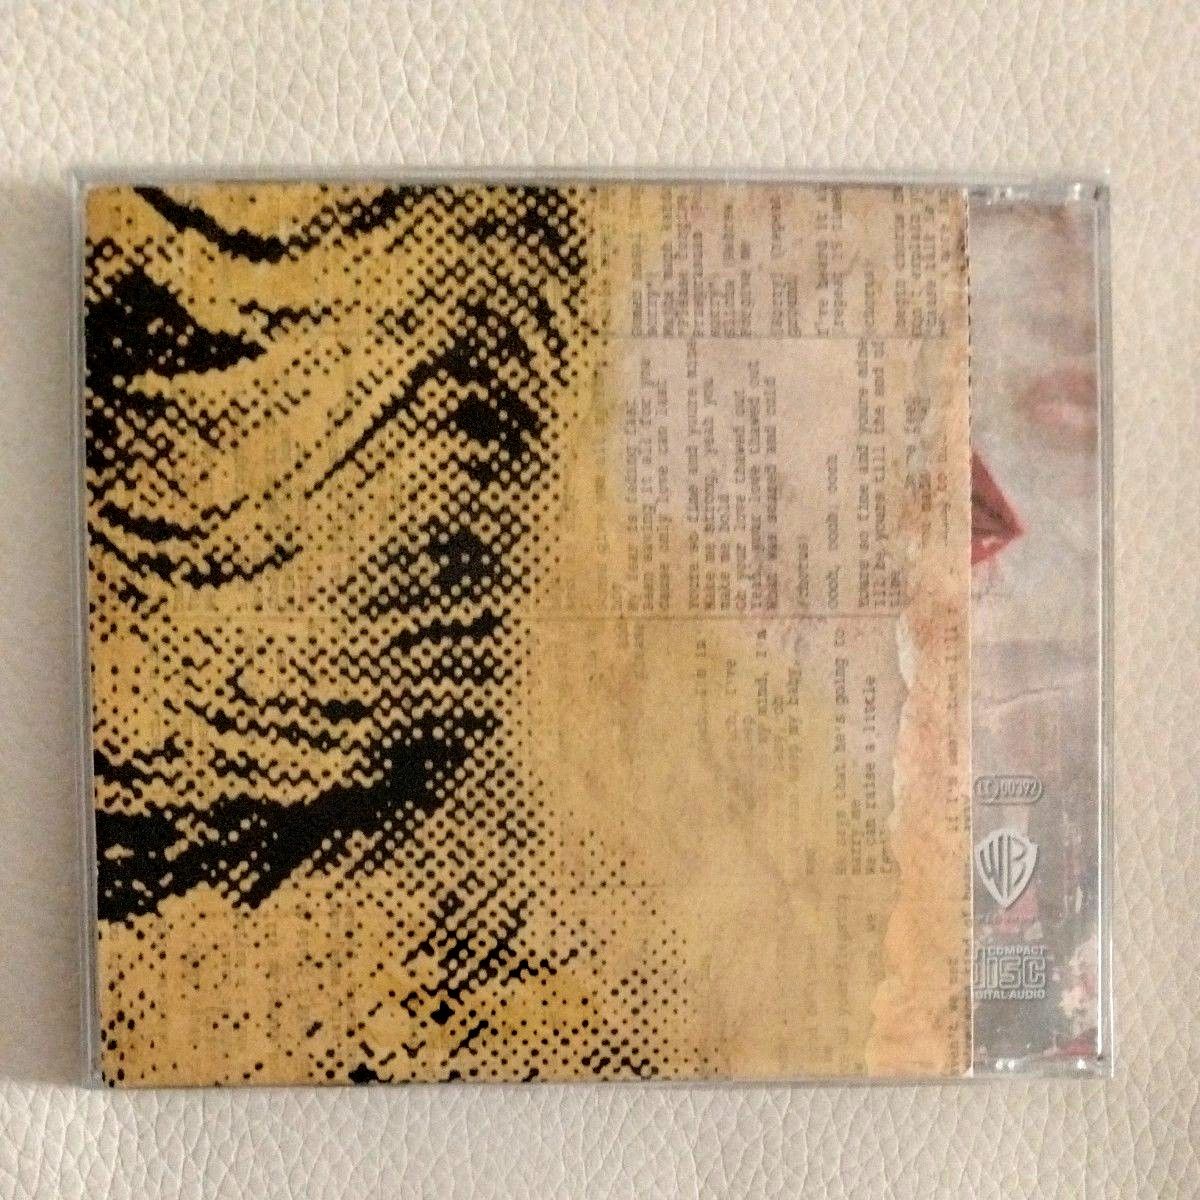 MADONNA CELEBRATION CD ALBUM 輸入盤